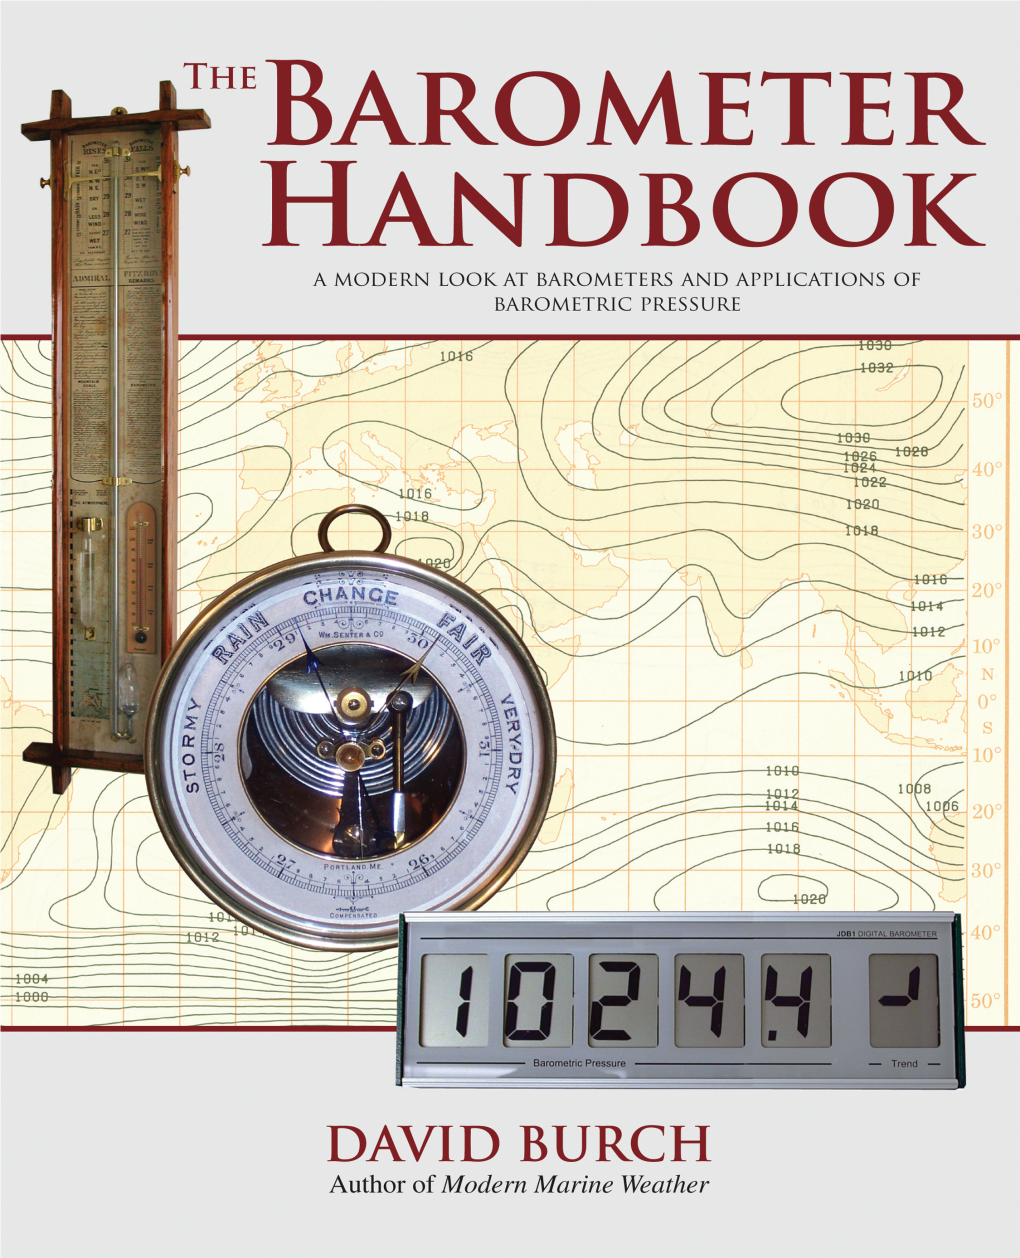 BAROMETER HANDBOOK a Modern Look at Barometers and Applications of Barometric Pressure